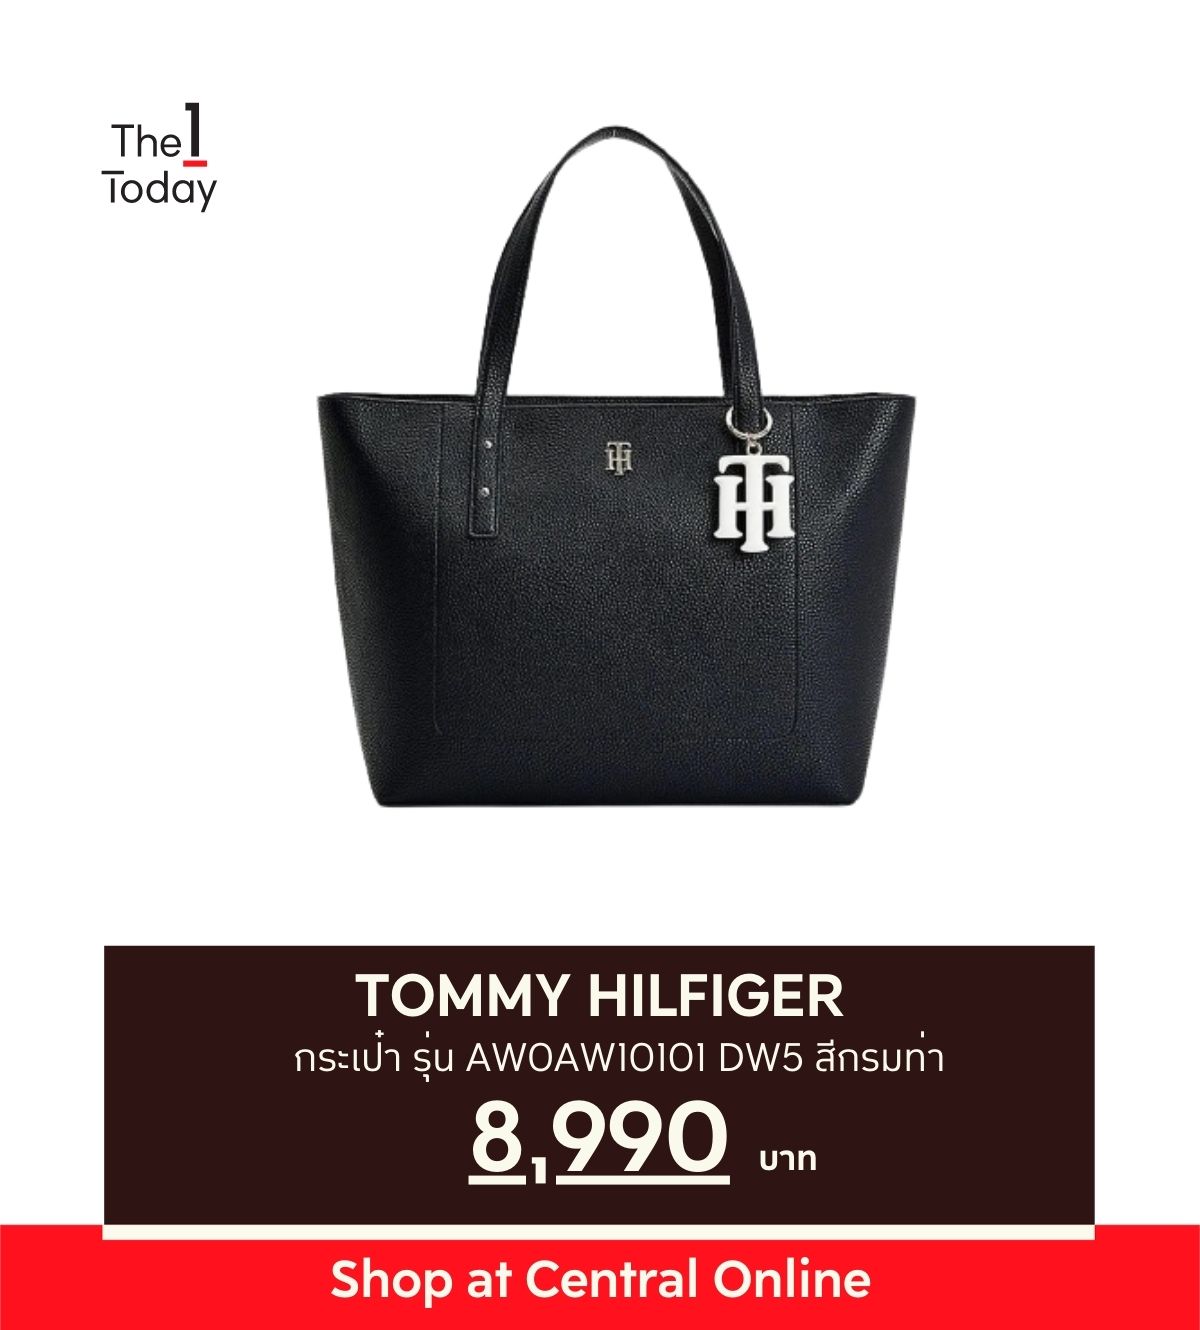 TOMMY HILFIGER กระเป๋า รุ่น AW0AW10101 DW5 สีกรมท่า ลด 50% จากราคาปกติ 8,990 บาท เหลือ 4,495 บาท